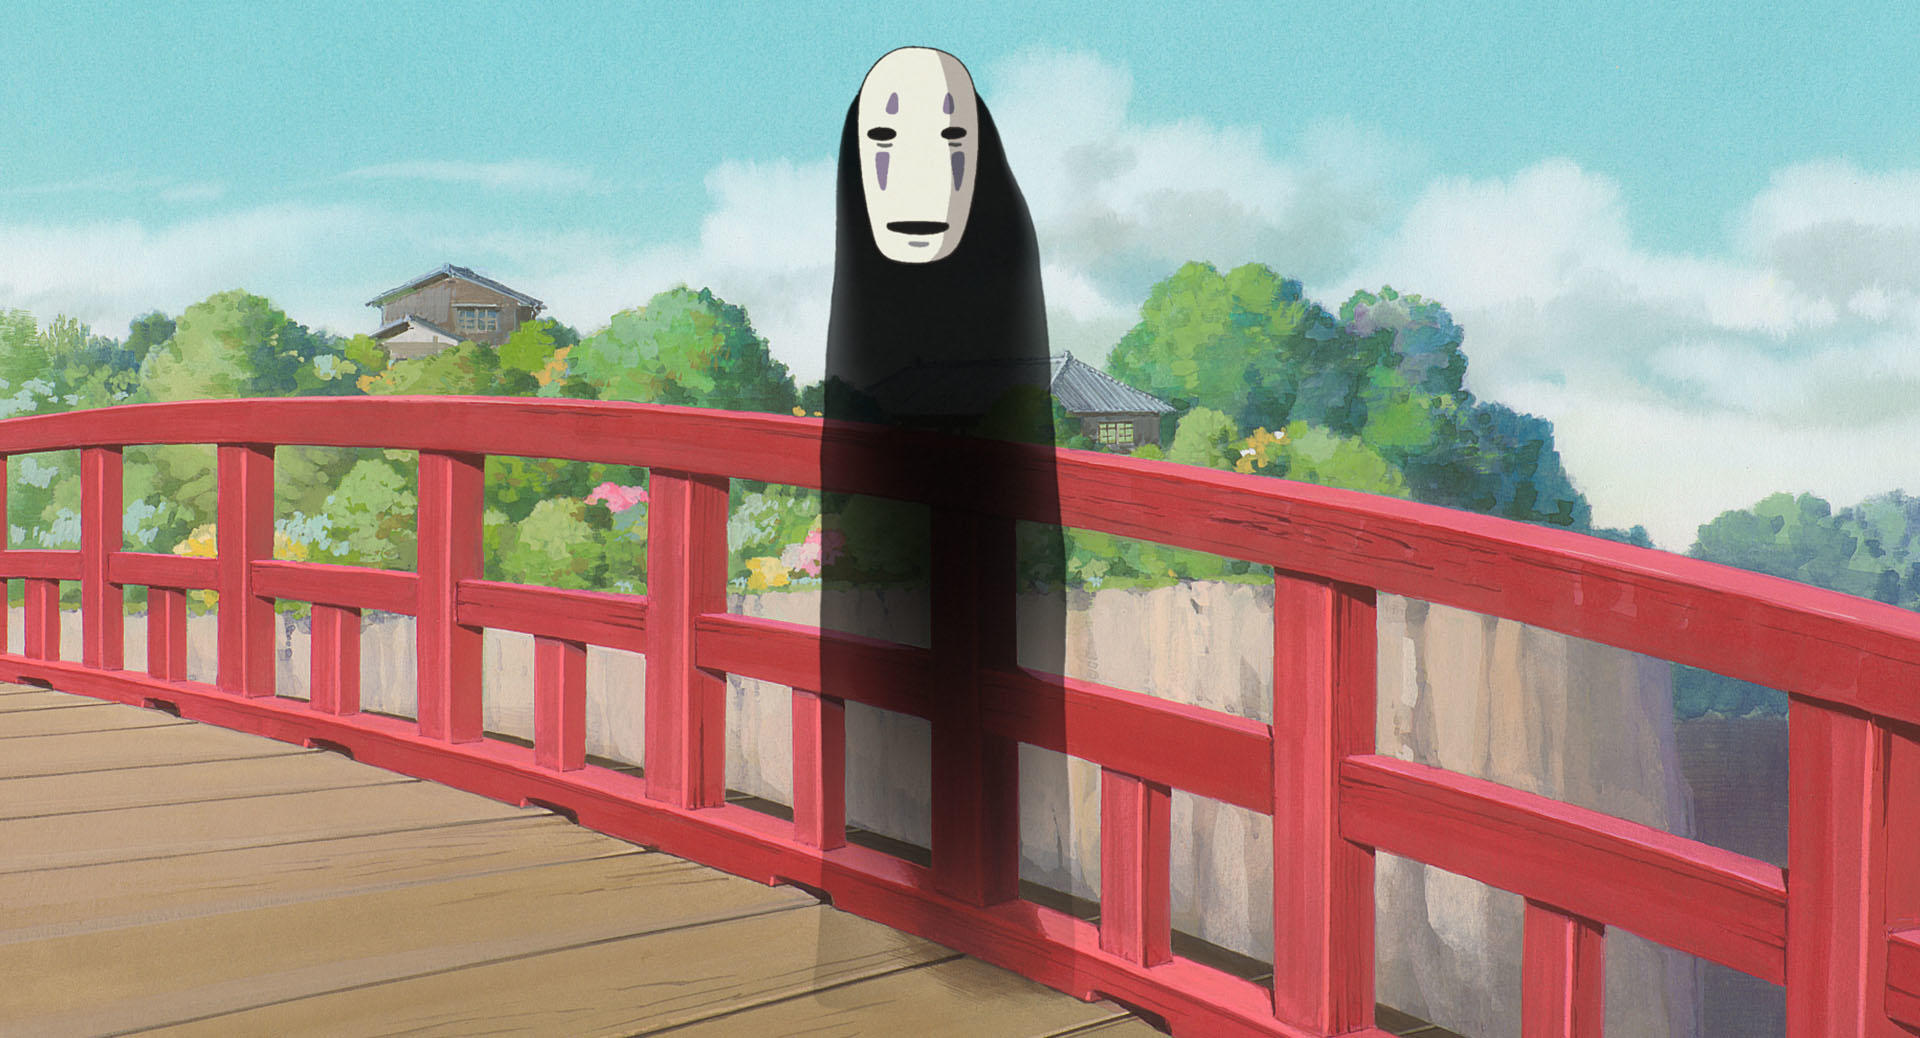 How Studio Ghibli's future came to involve streaming, more Hayao Miyazaki